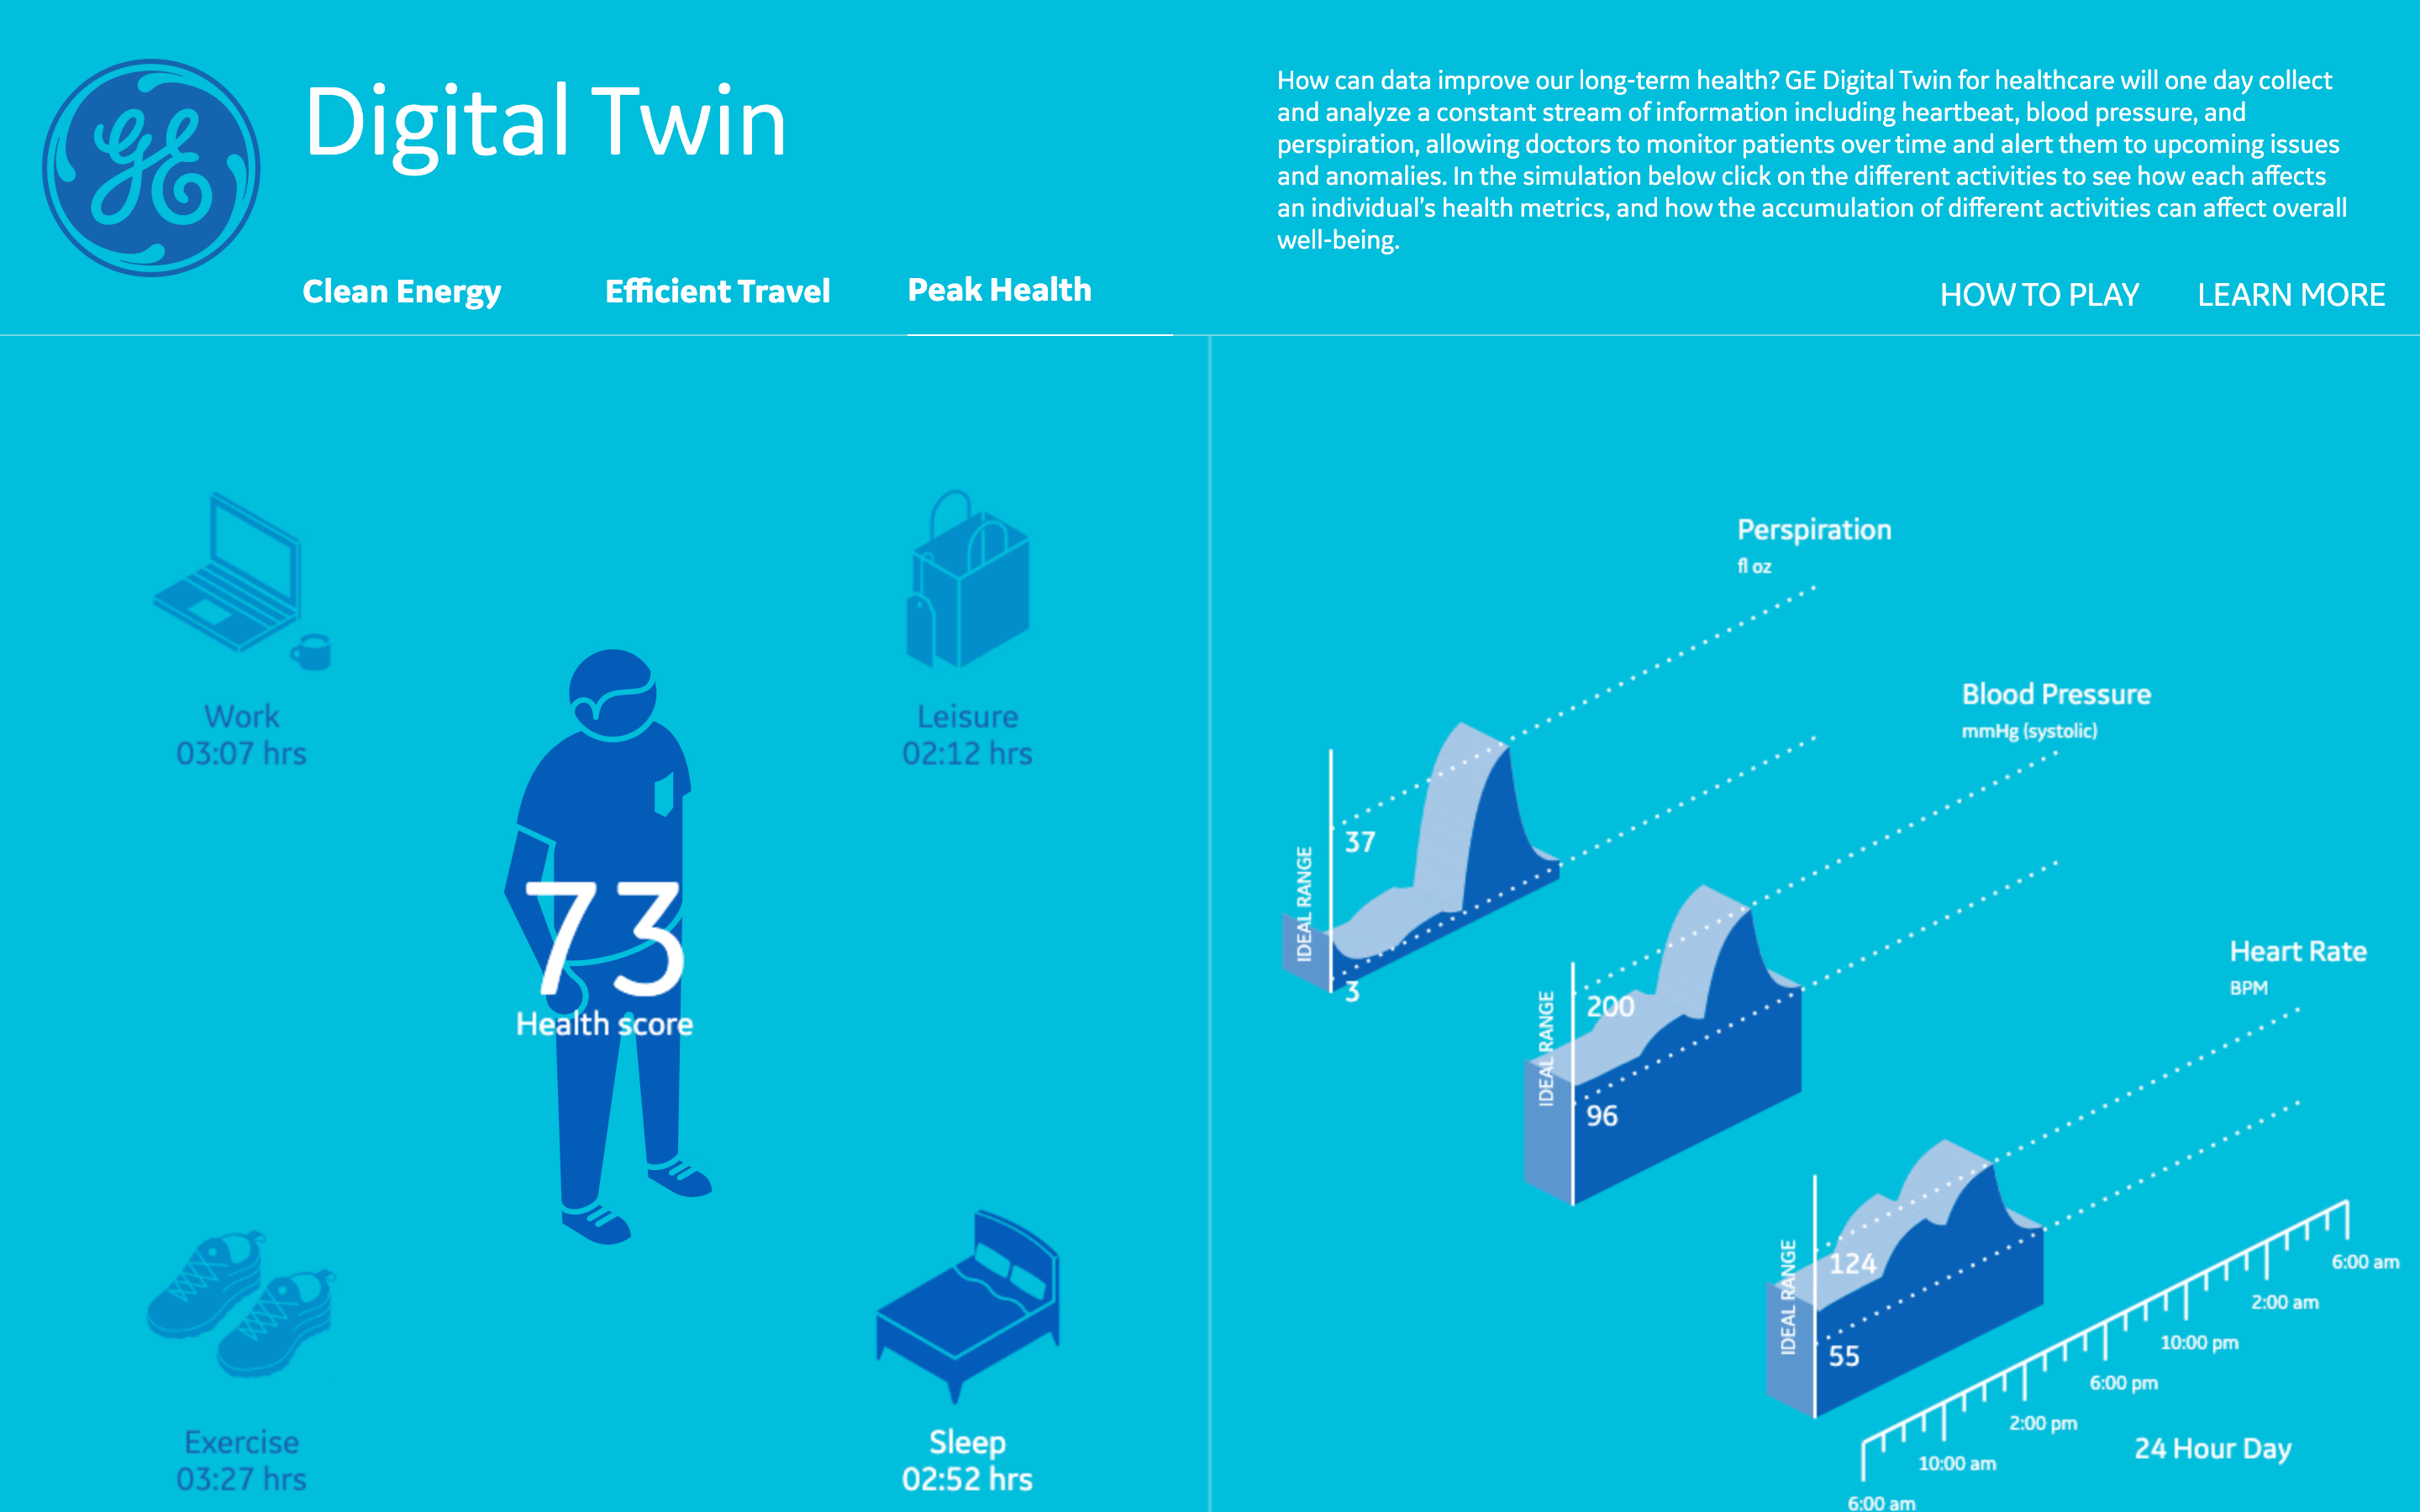 Digital Twin Simulation: Peak Health